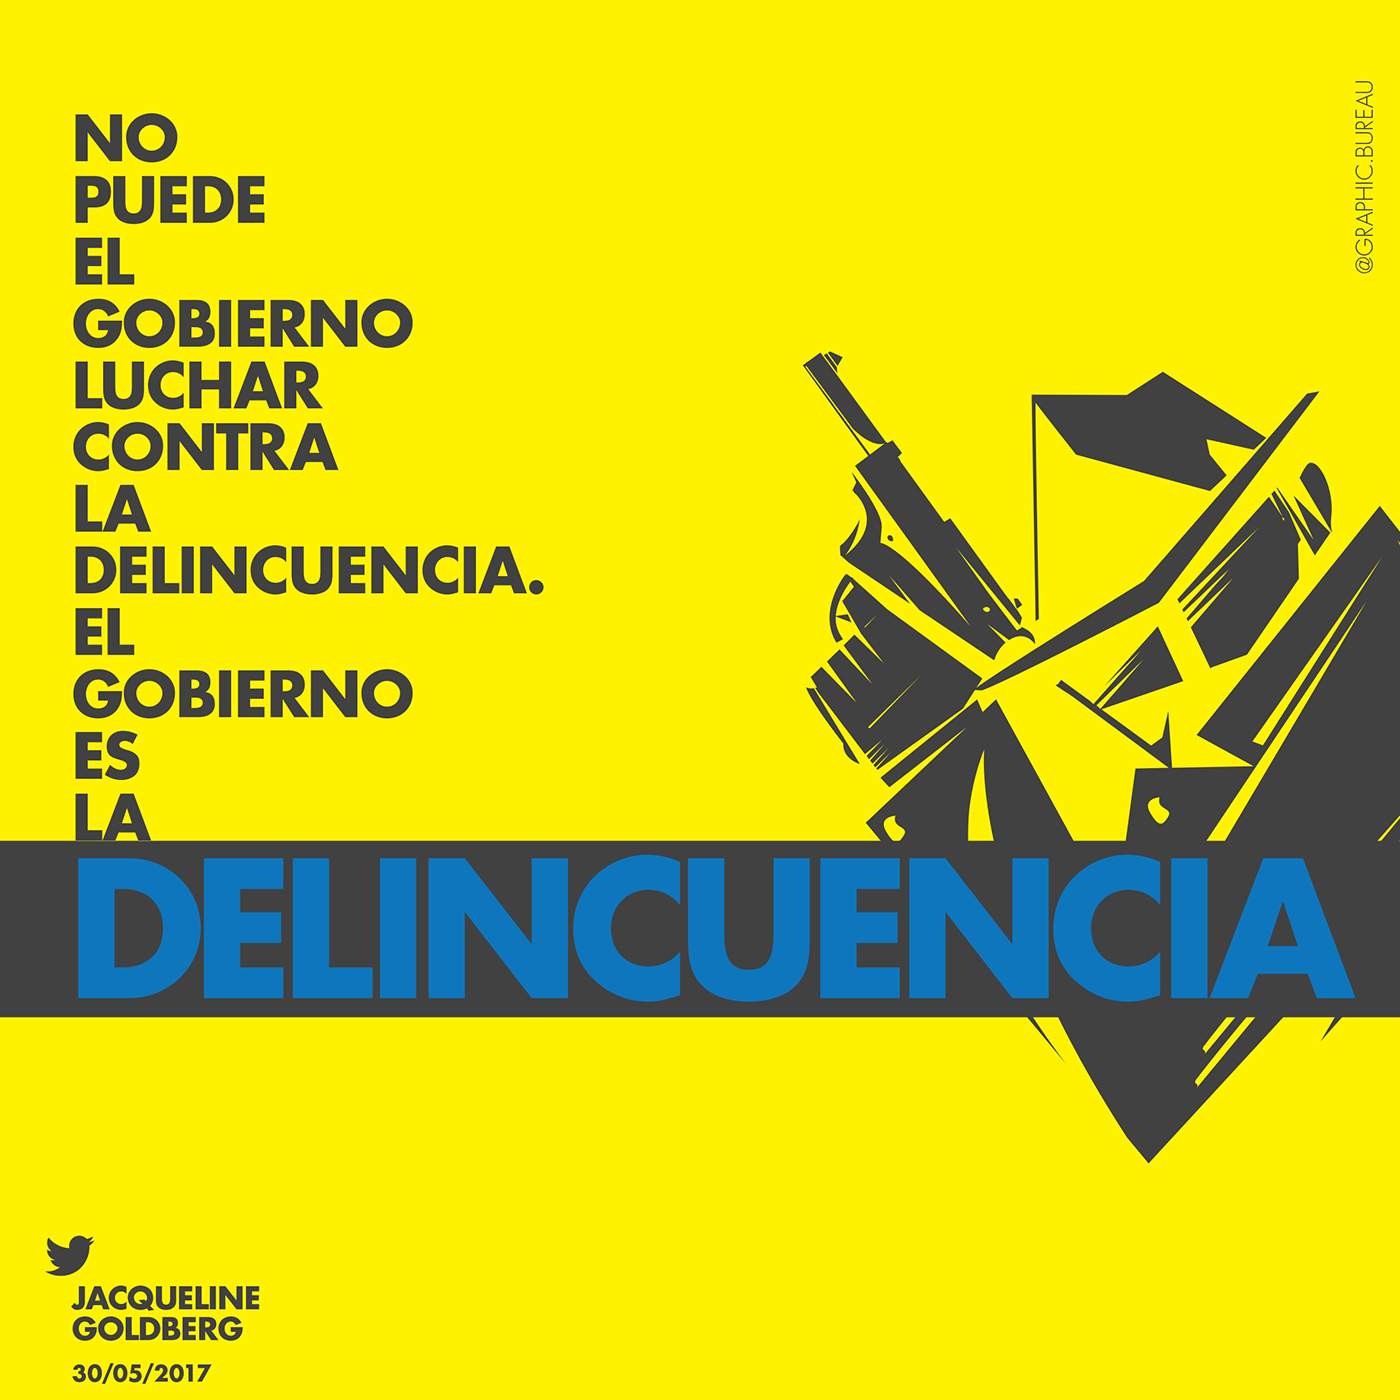 political graphics Grafica Disidente Grafica politica Arte Protesta Venezuela cartel Political posters poster protesta